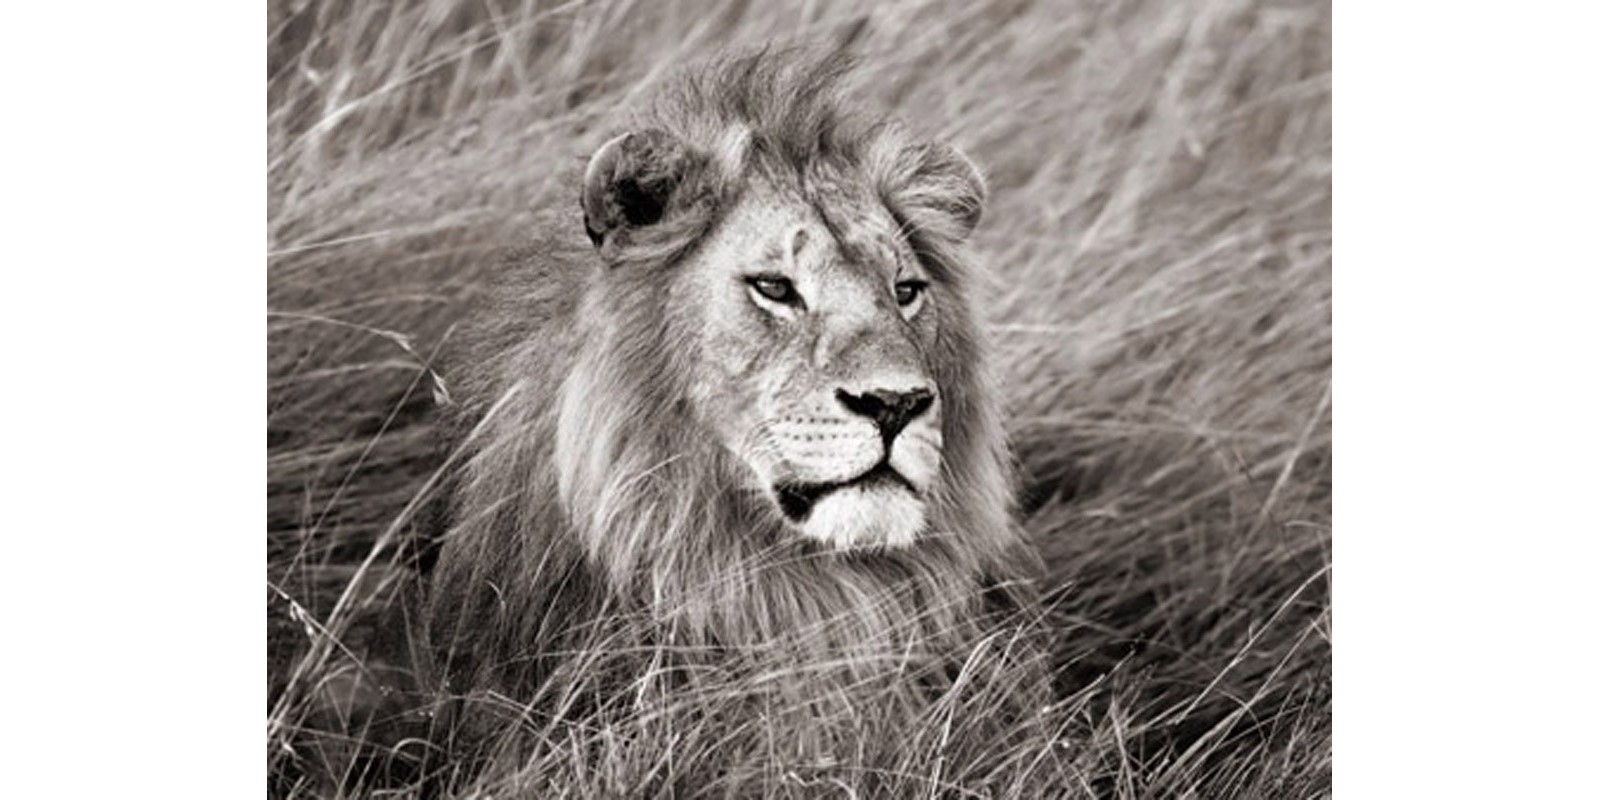 Frank Krahmer - African lion, Masai Mara, Kenya